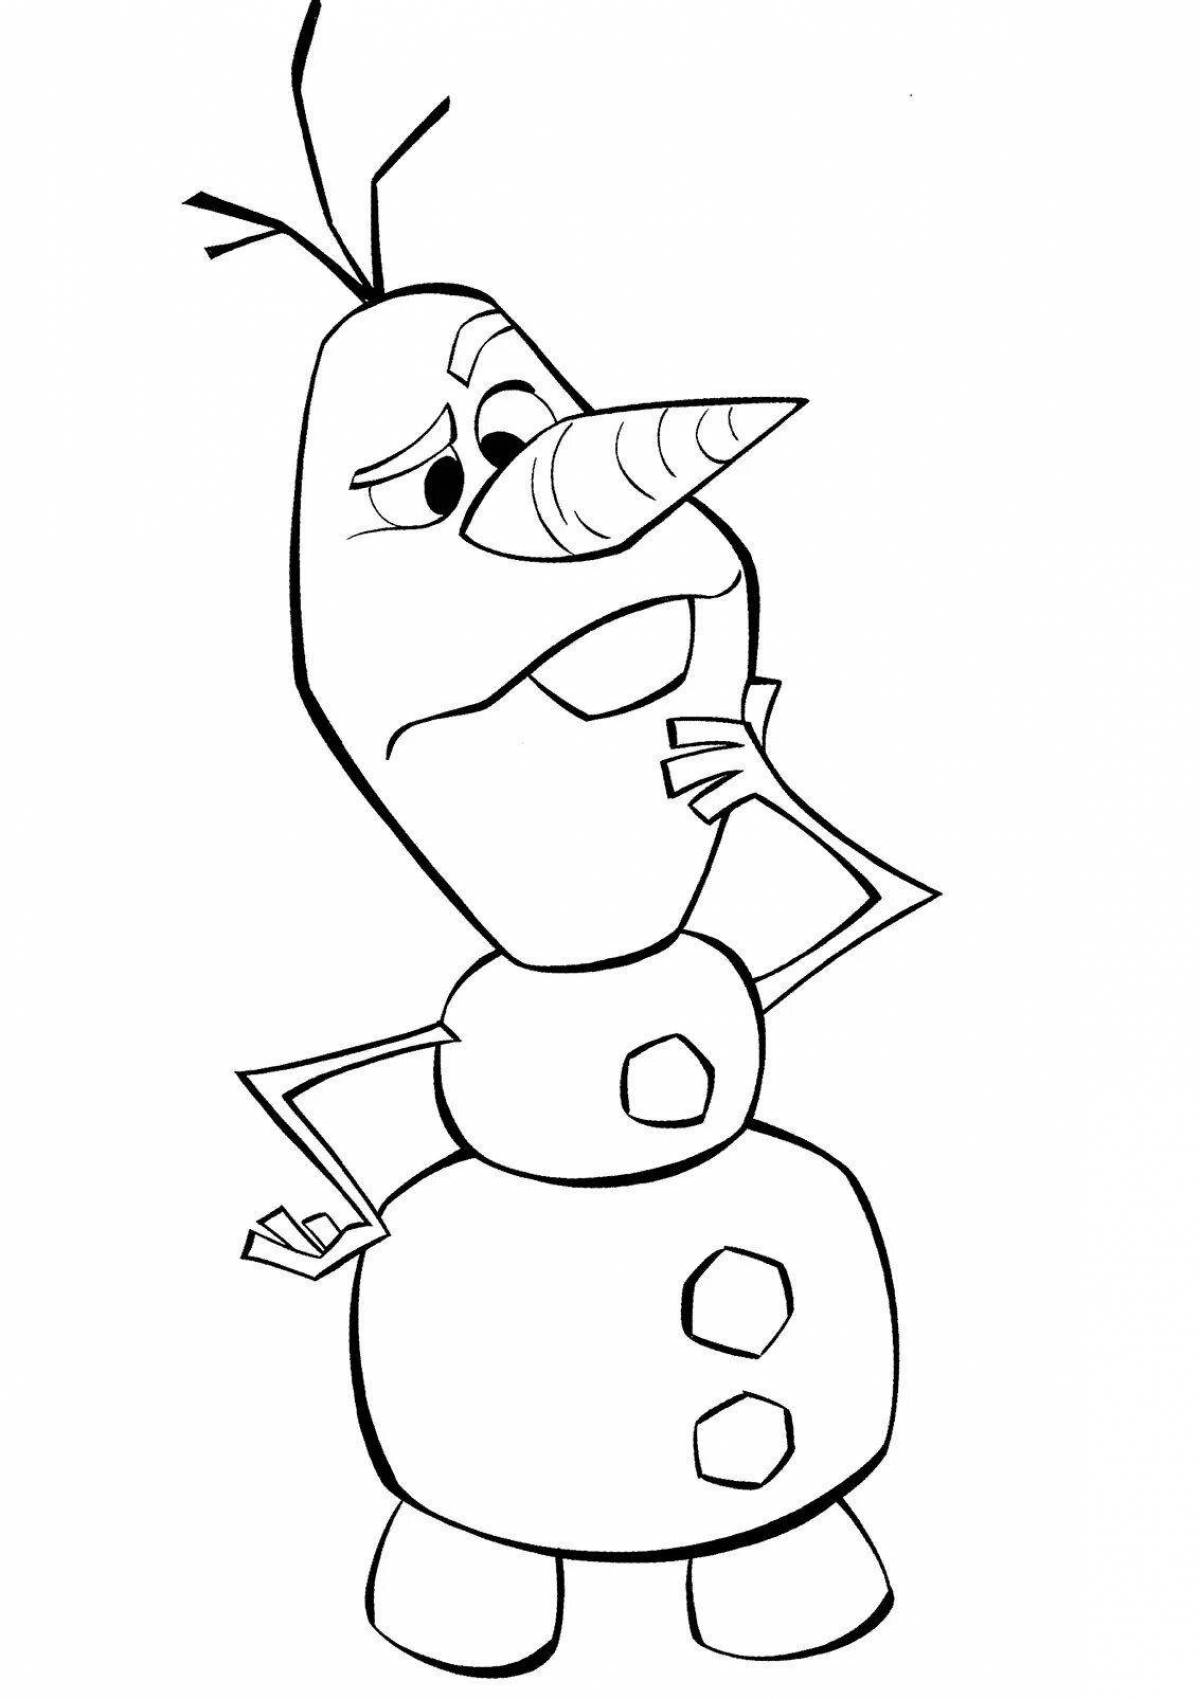 Olaf fun coloring for kids